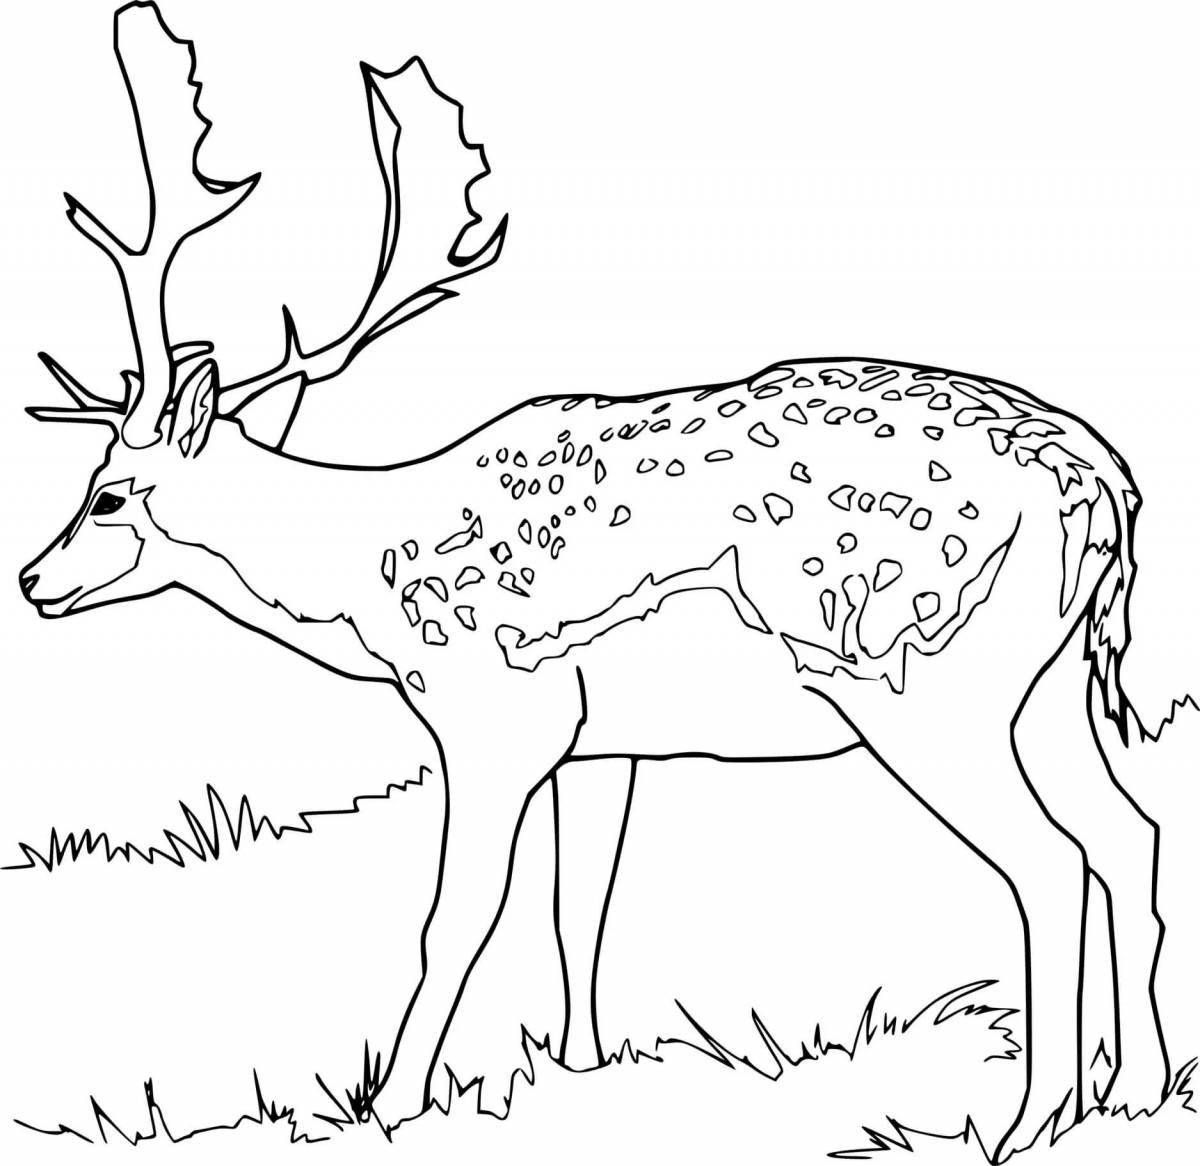 Coloring book happy sika deer